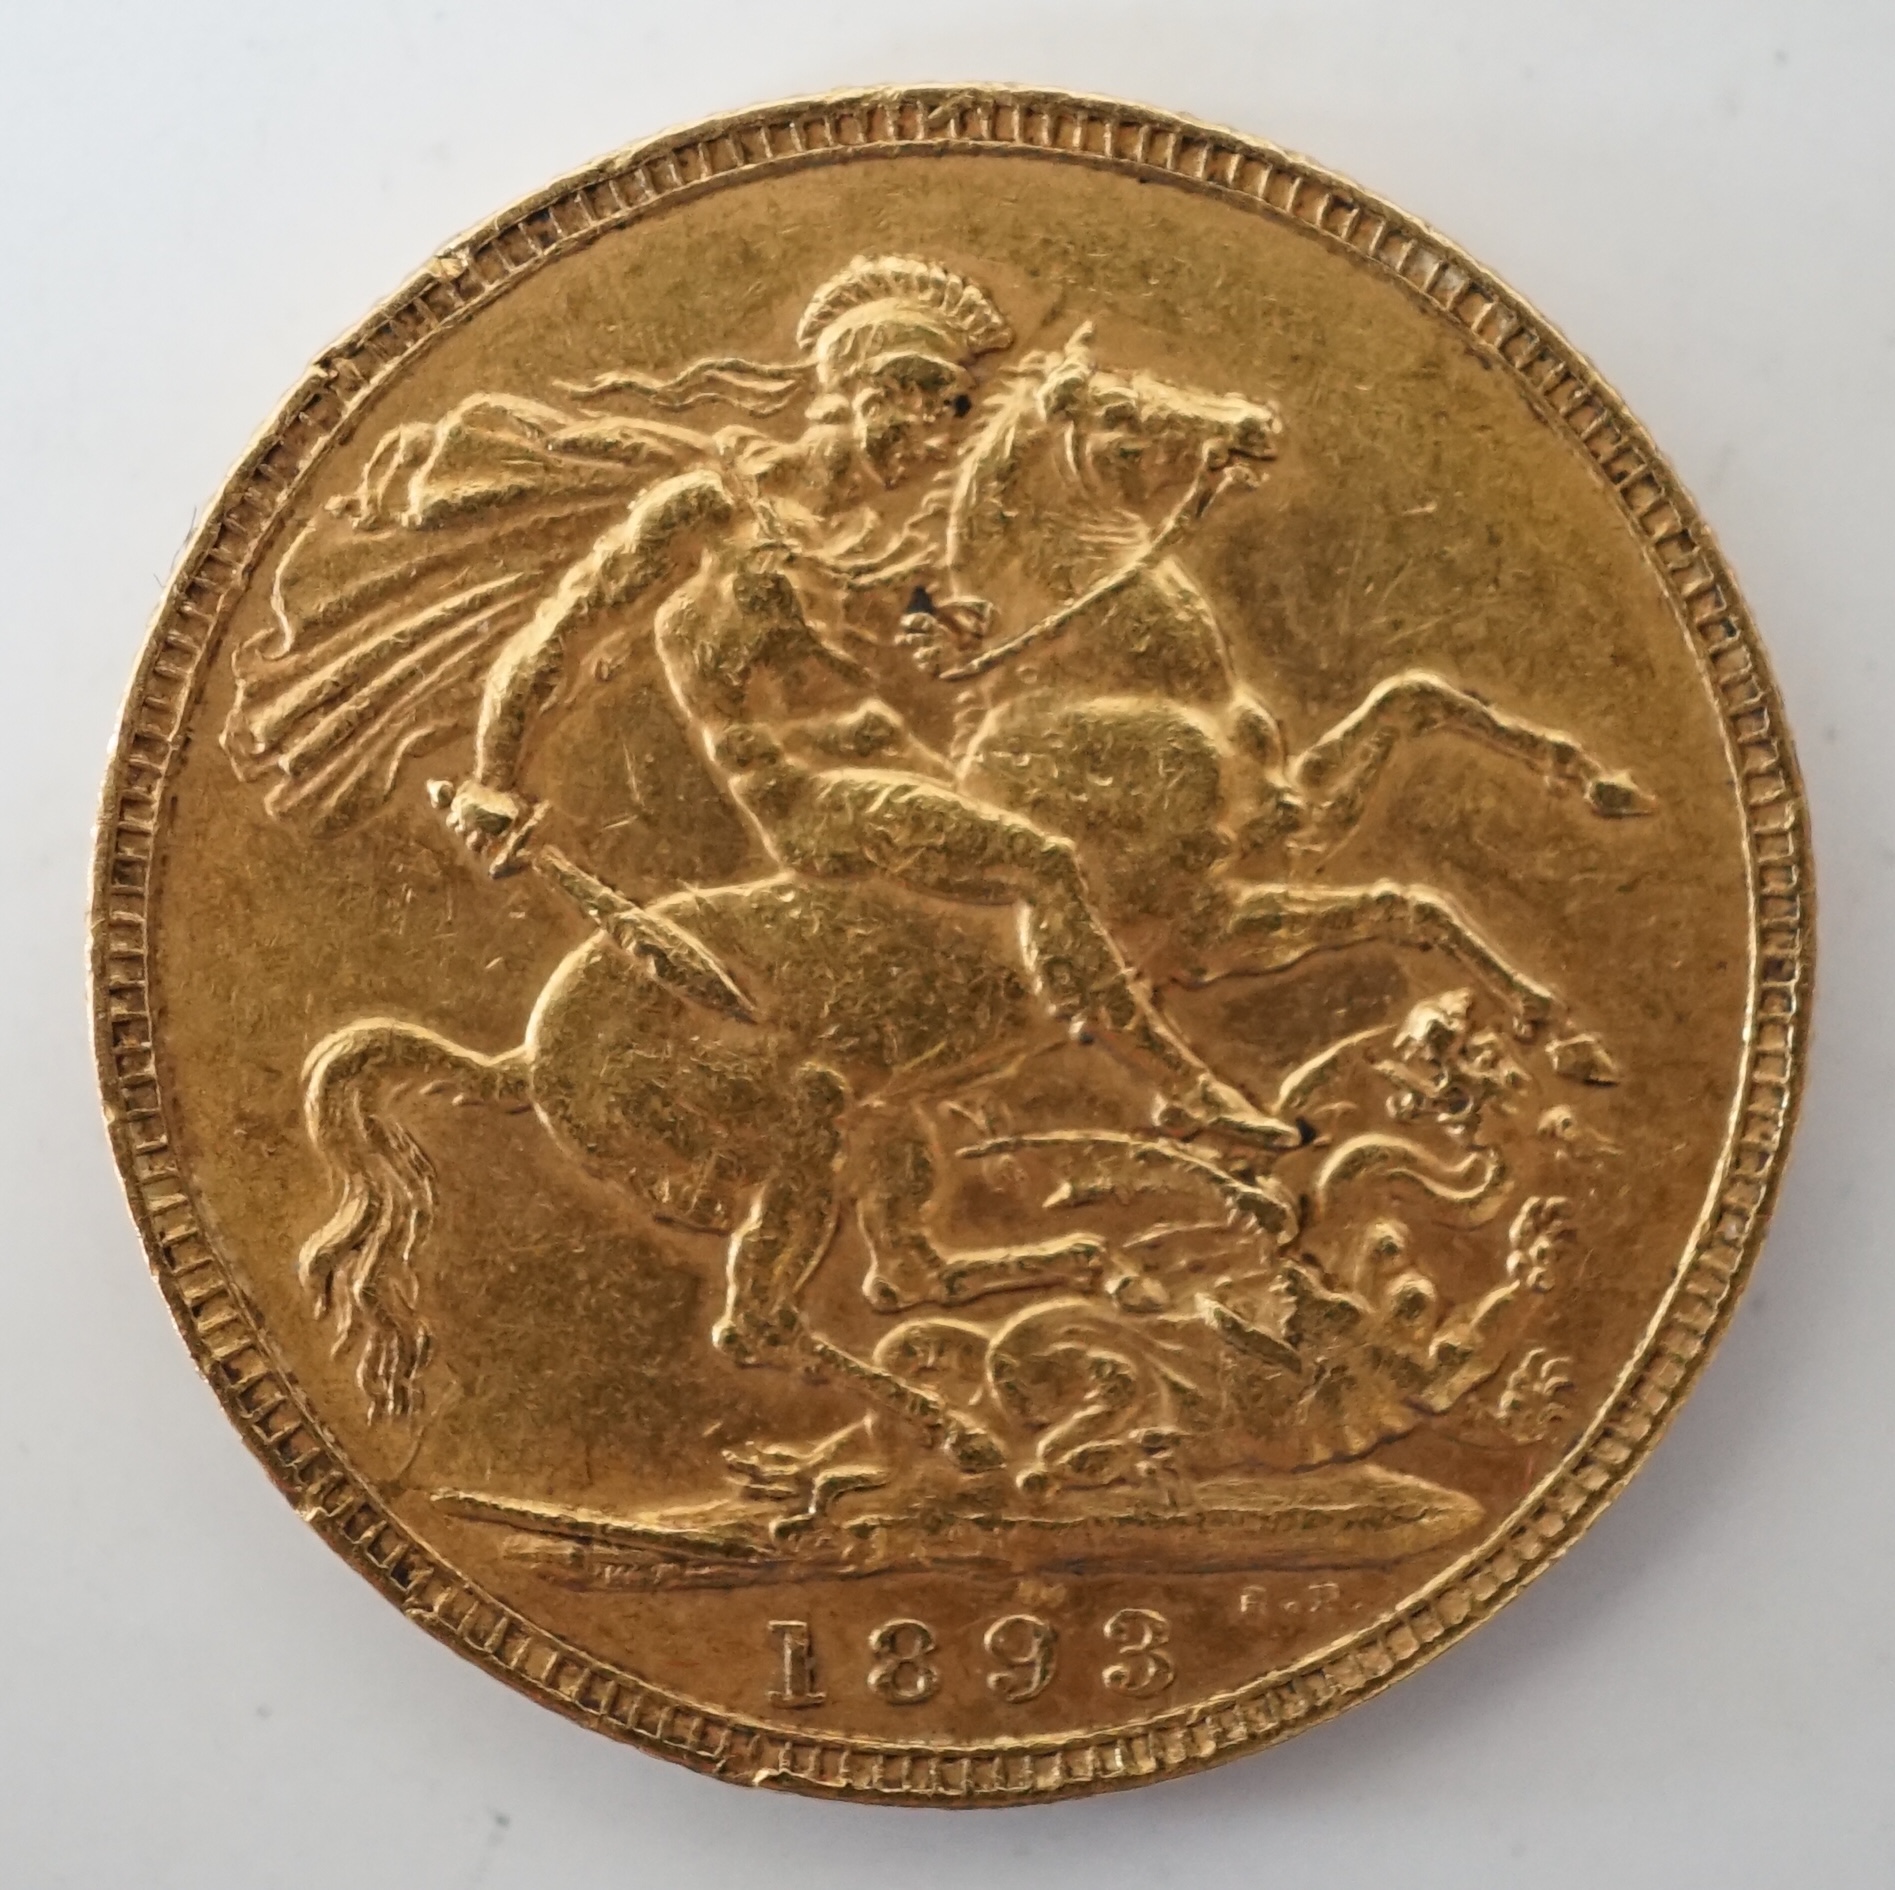 British gold coins, Victoria sovereign, 1893, Veiled head (S3874), edge nicks otherwise good VF